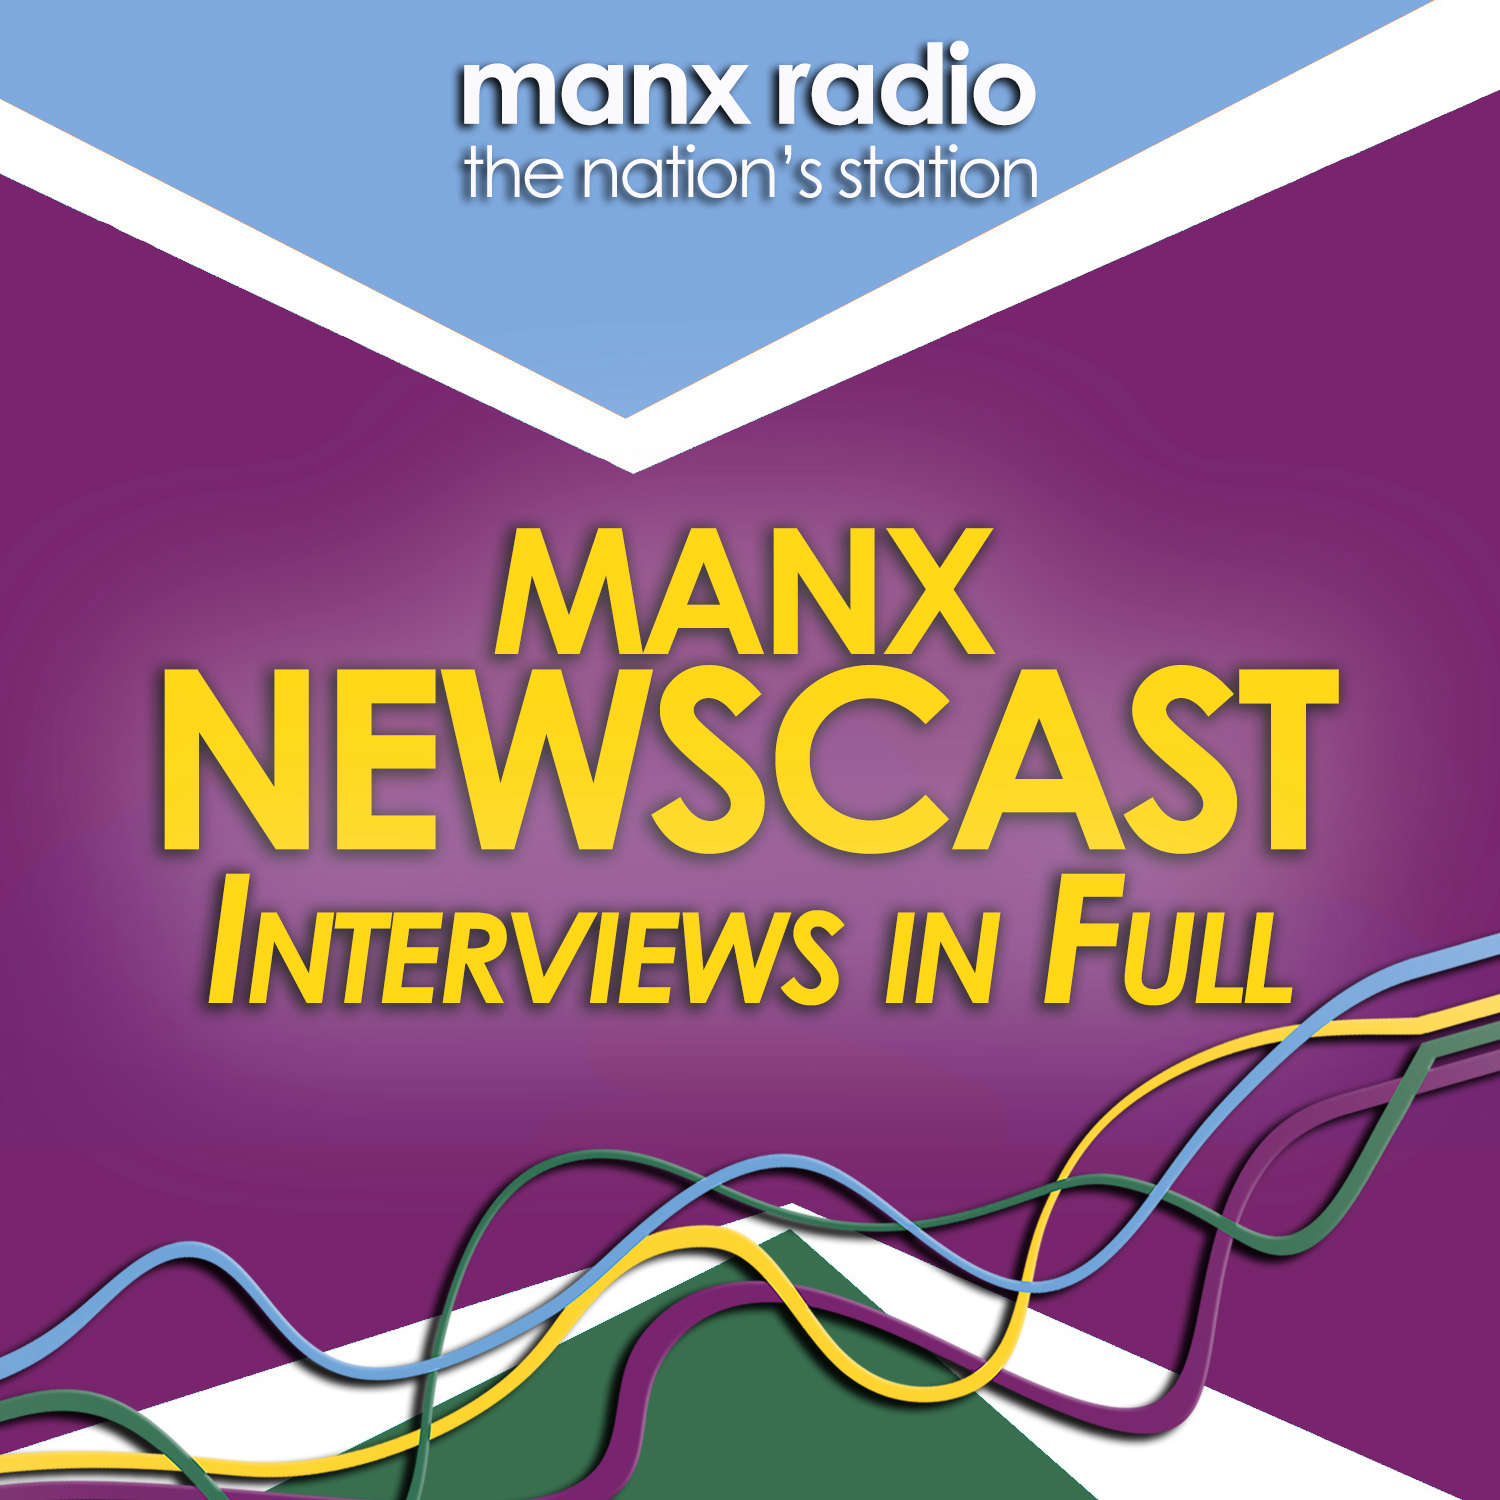 Manx Newscast - Interviews in Full